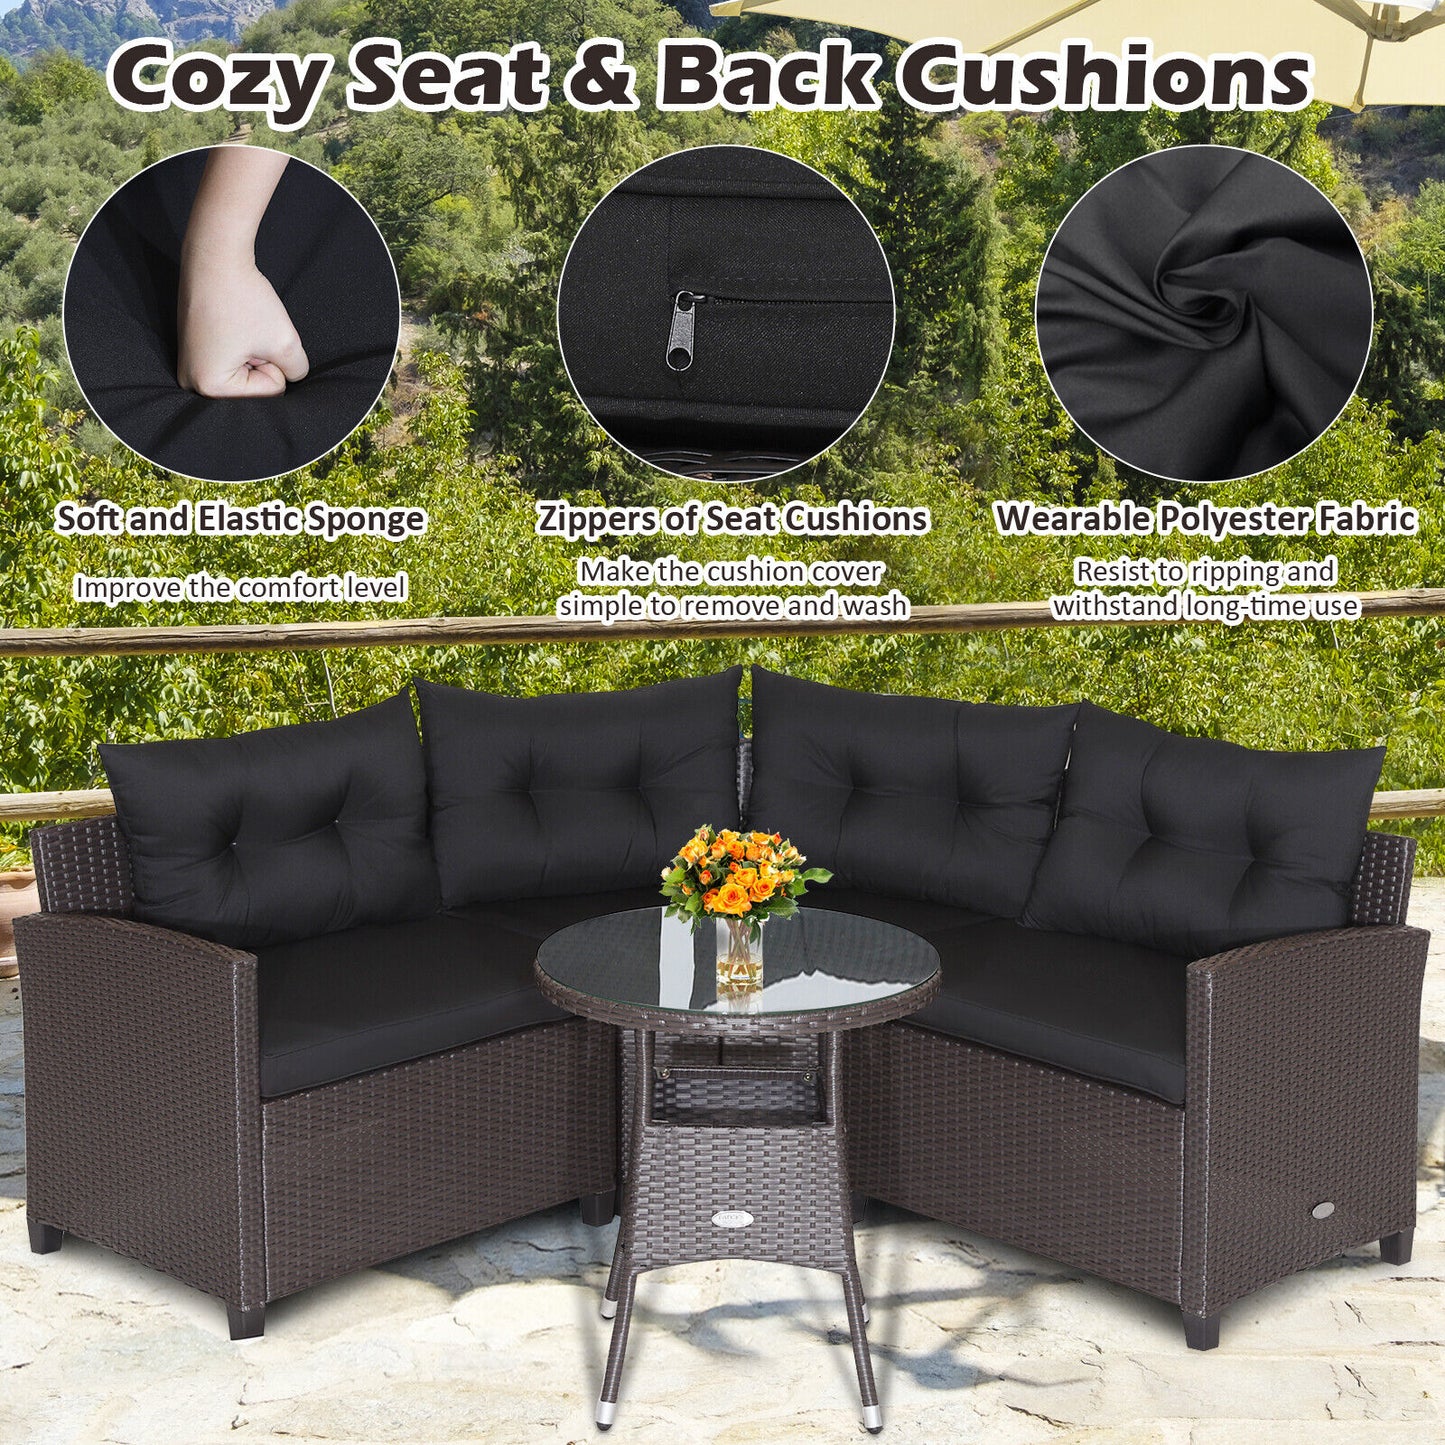 4 Pieces Patio Rattan Furniture Set Cushioned Sofa Glass Table-Black